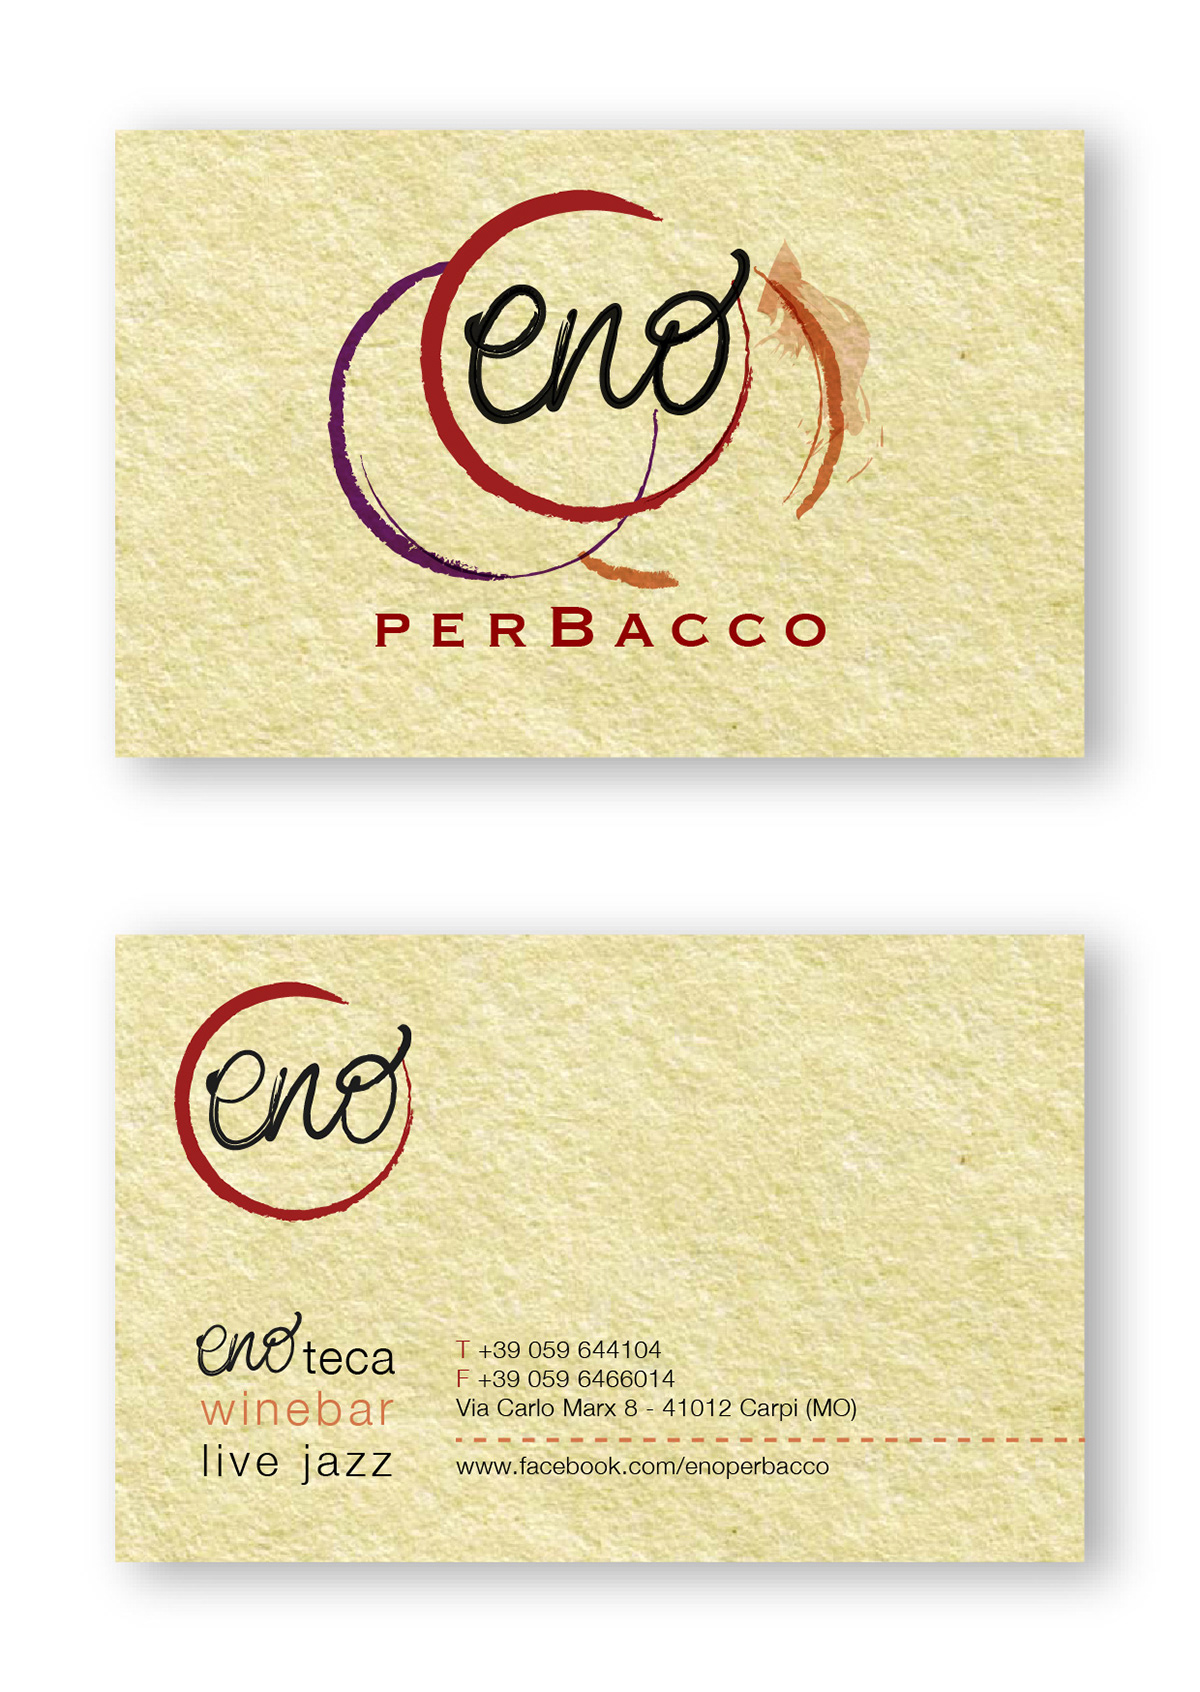 logo enoteca wine stain glass brand